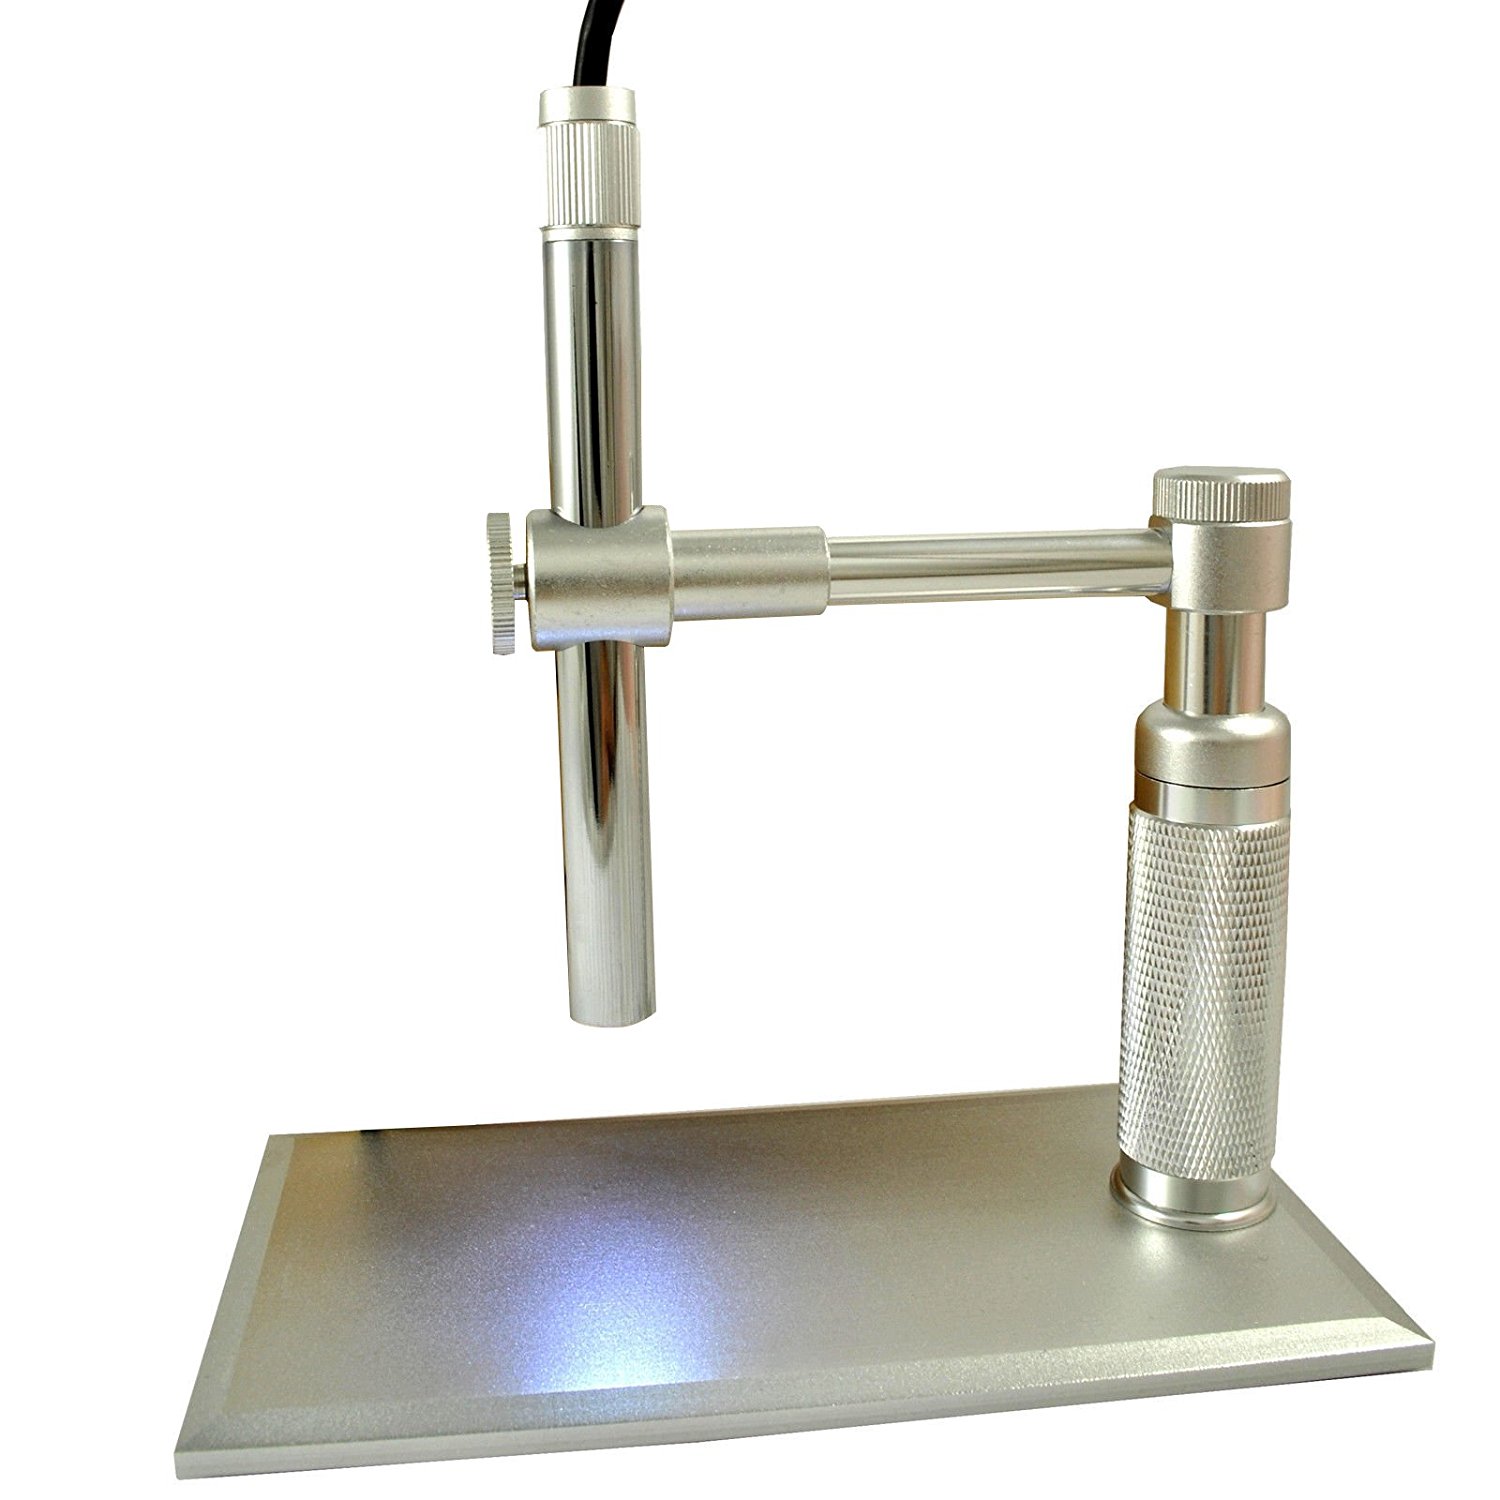 130x Usb Microscope Camera Software